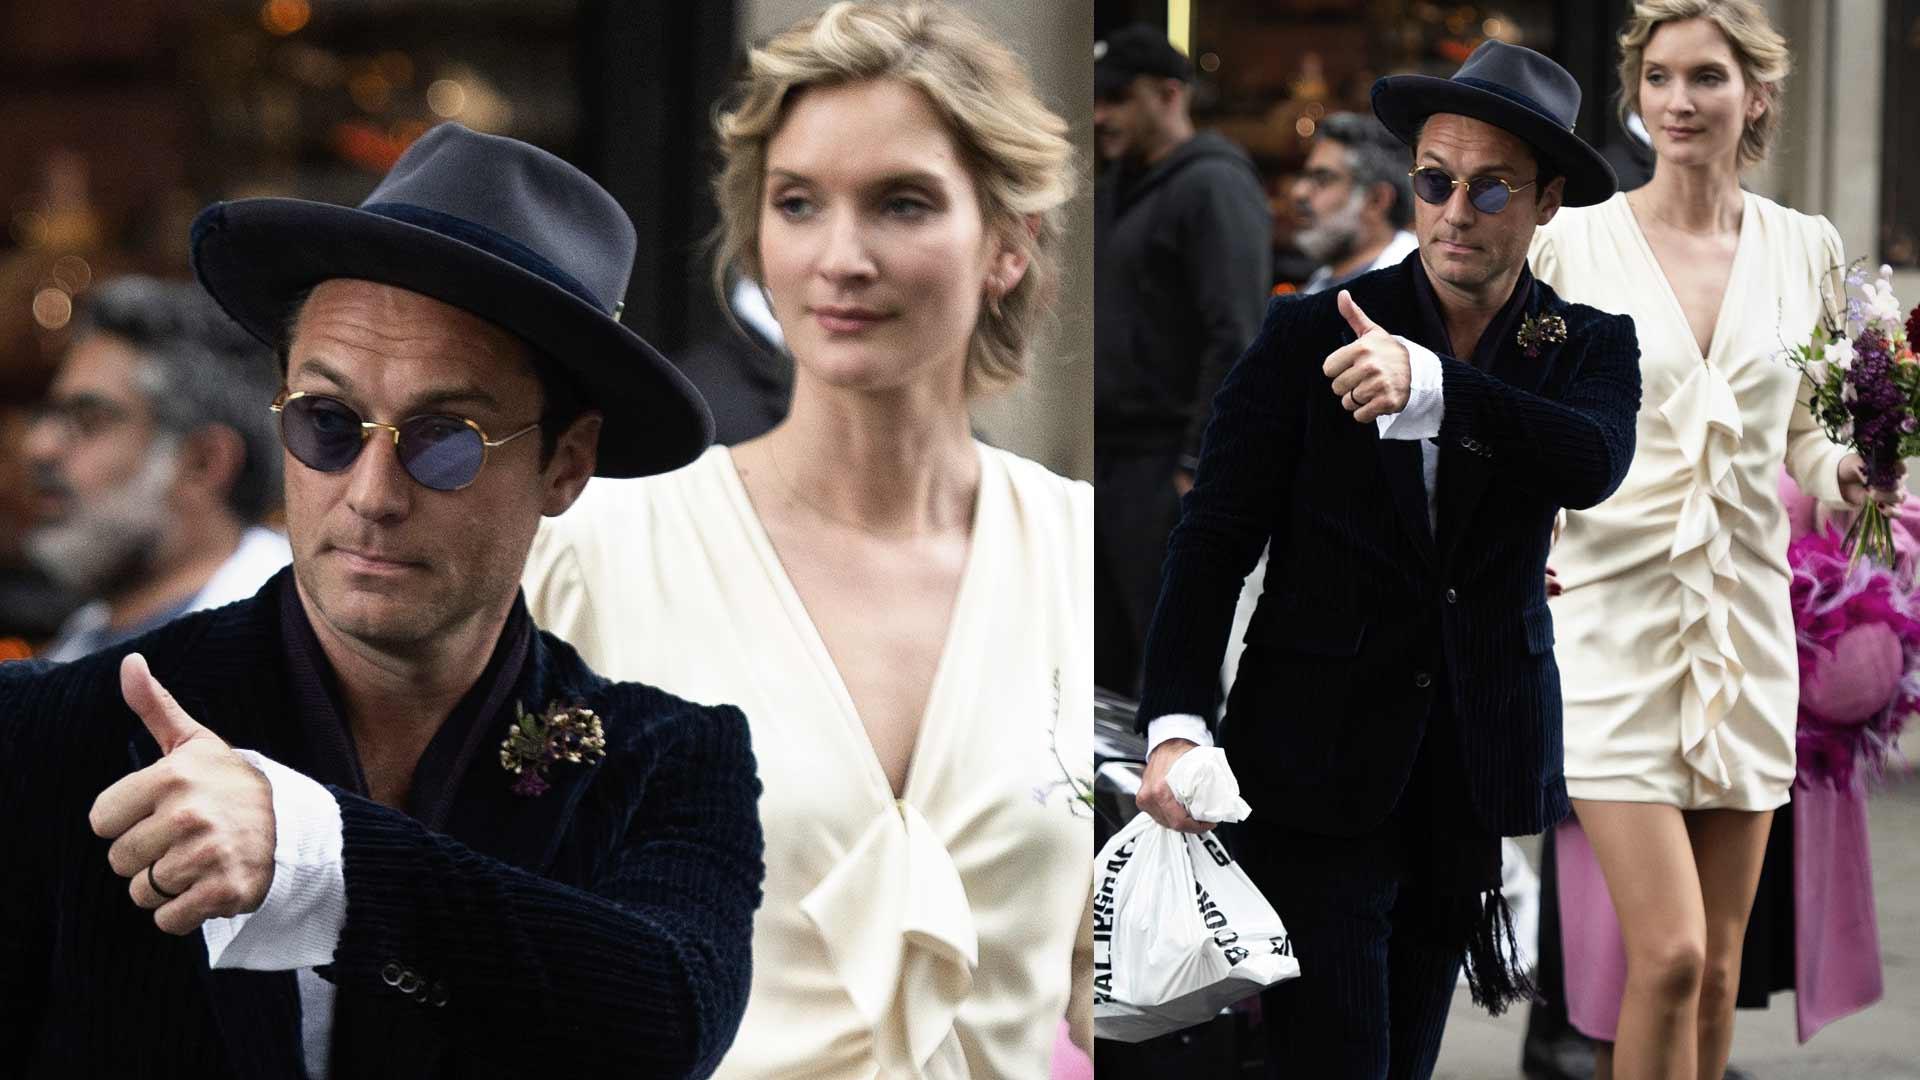 Jude Law Marries Girlfriend Phillipa Coan in Secret Ceremony